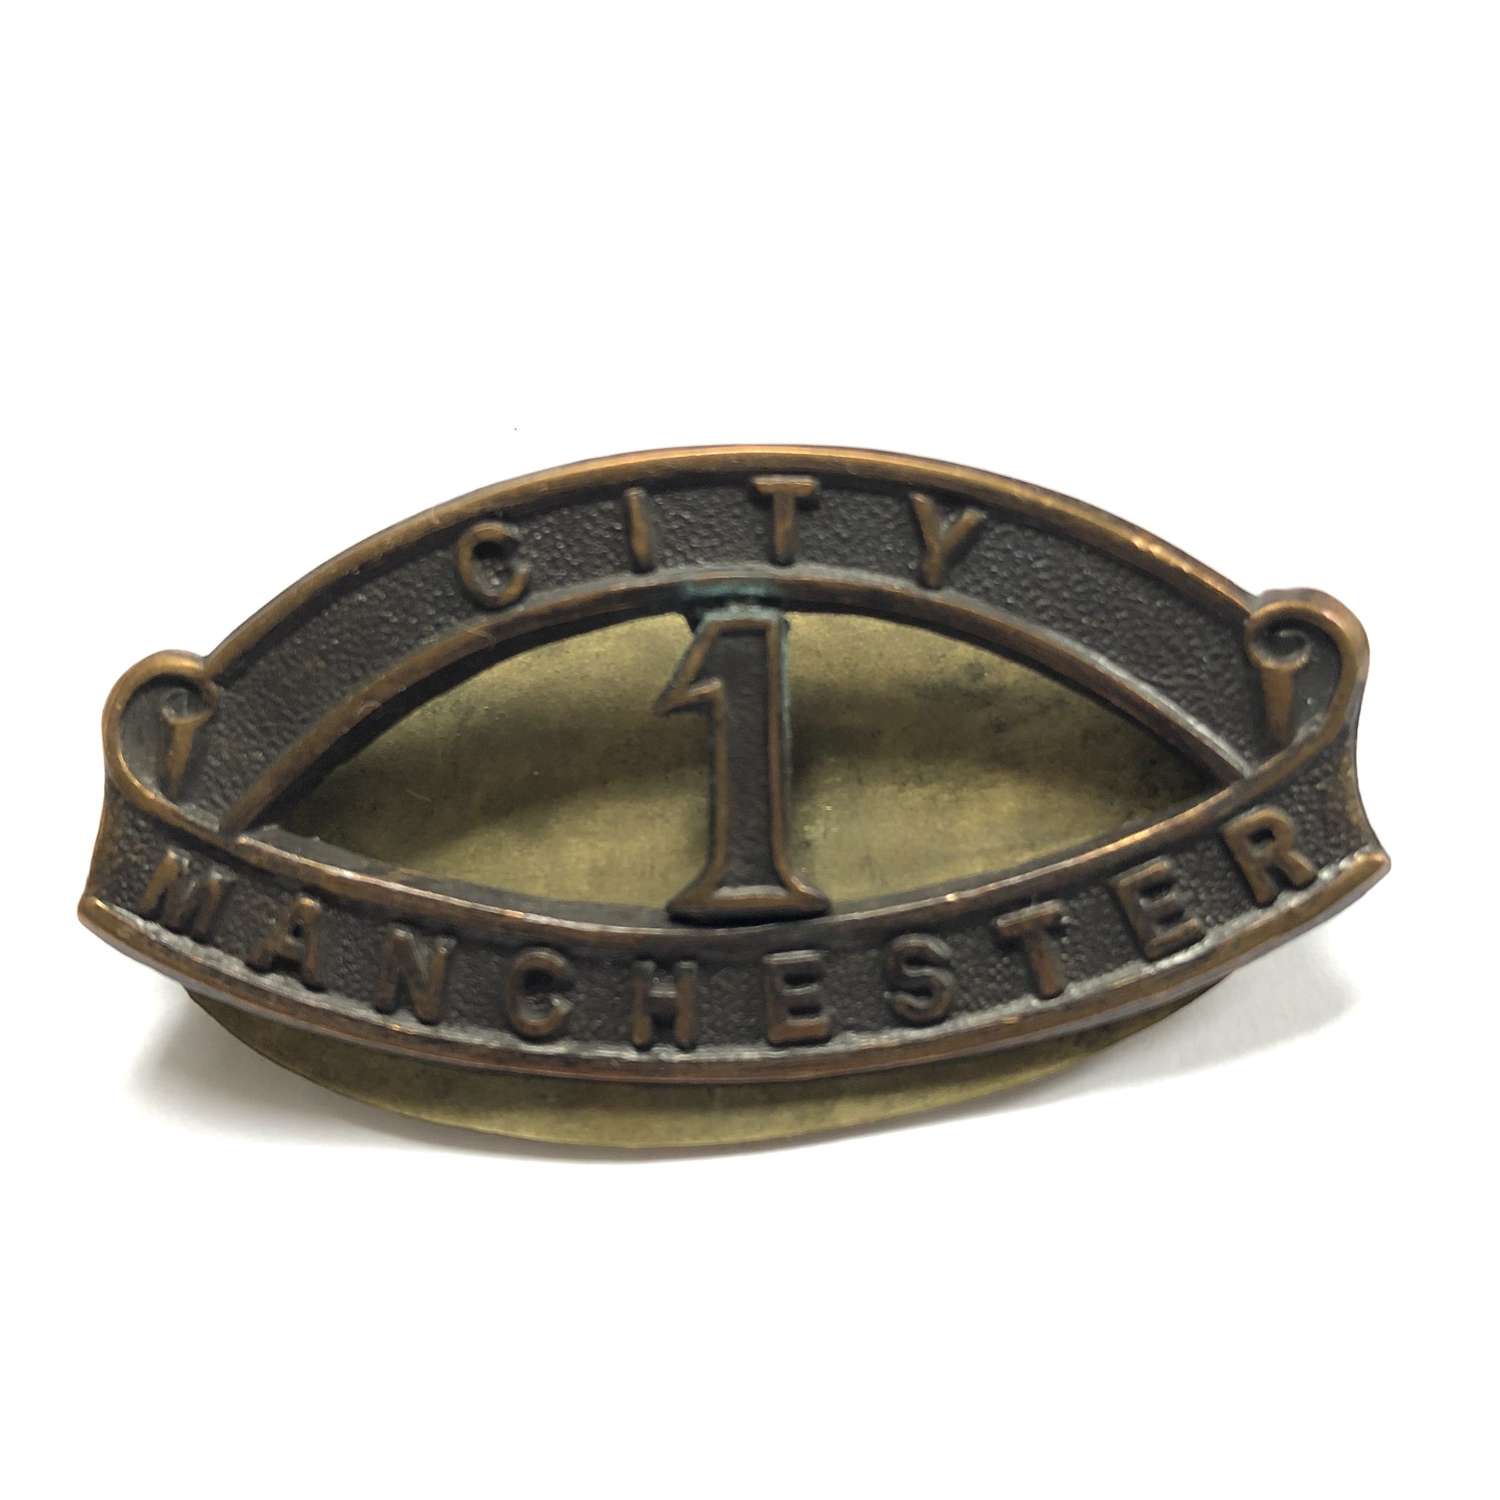 CITY / 1 / MANCHESTER WW1 ‘Manchester Pals’ bronze shoulder title